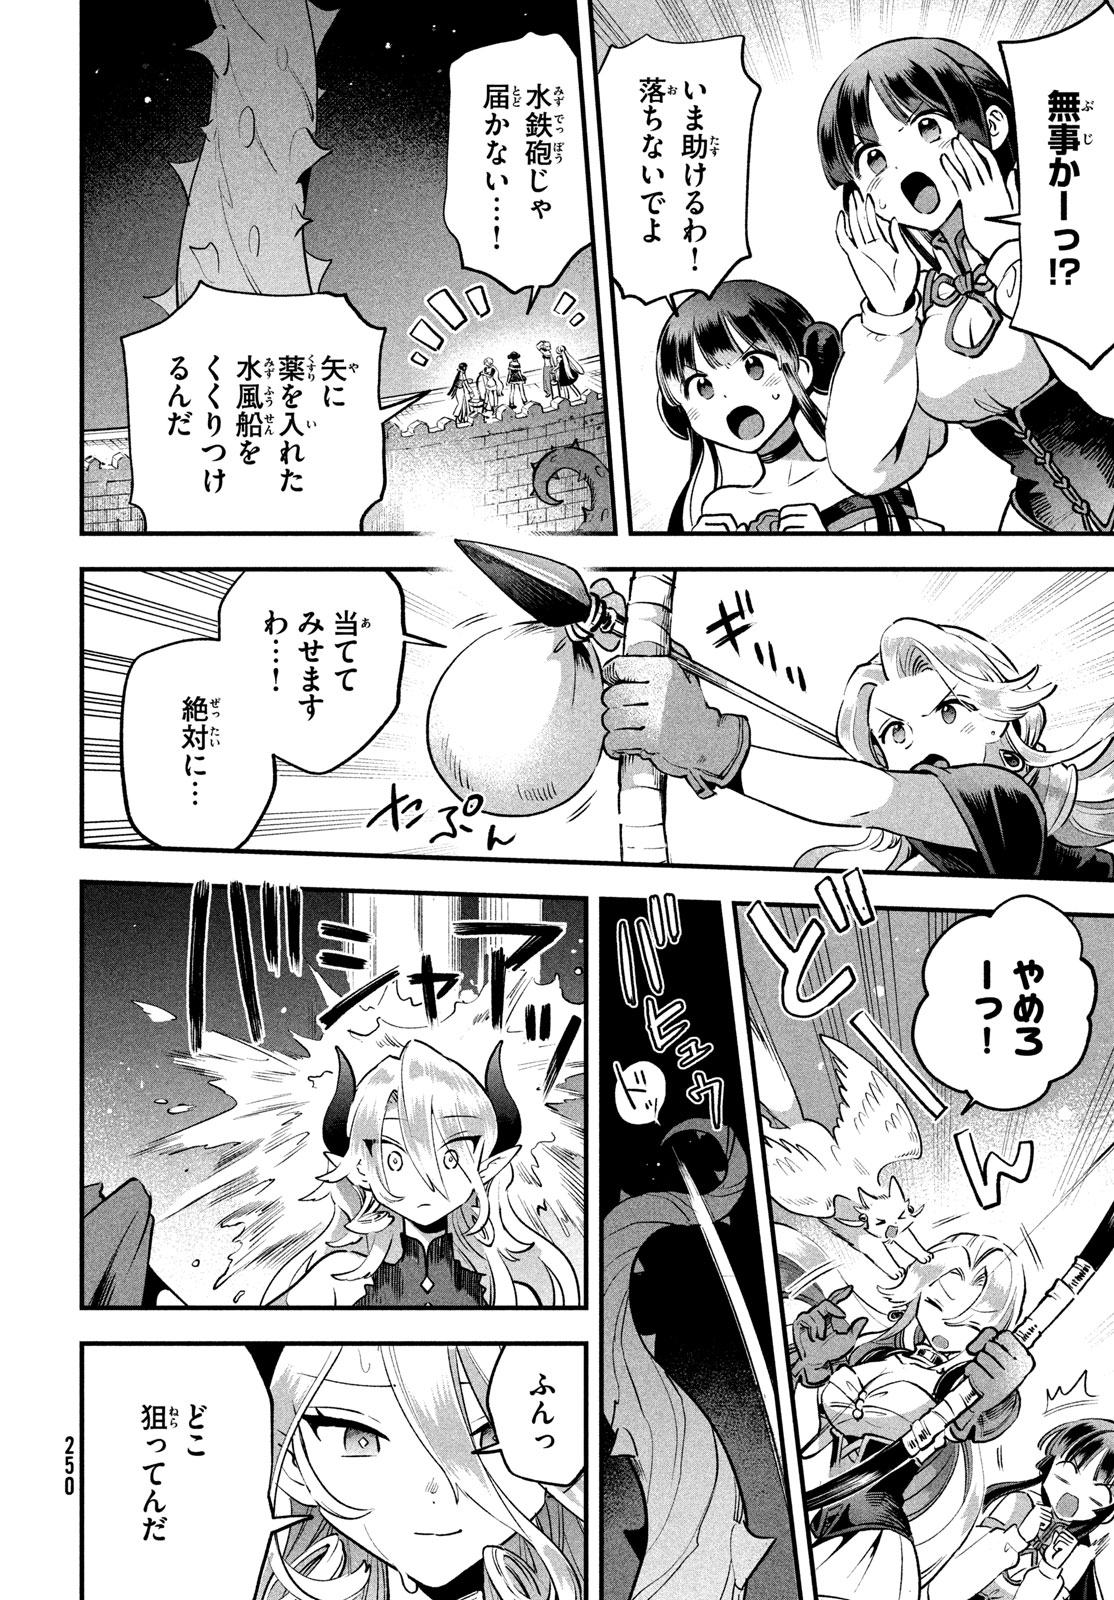 7-nin no Nemuri Hime - Chapter 47 - Page 10